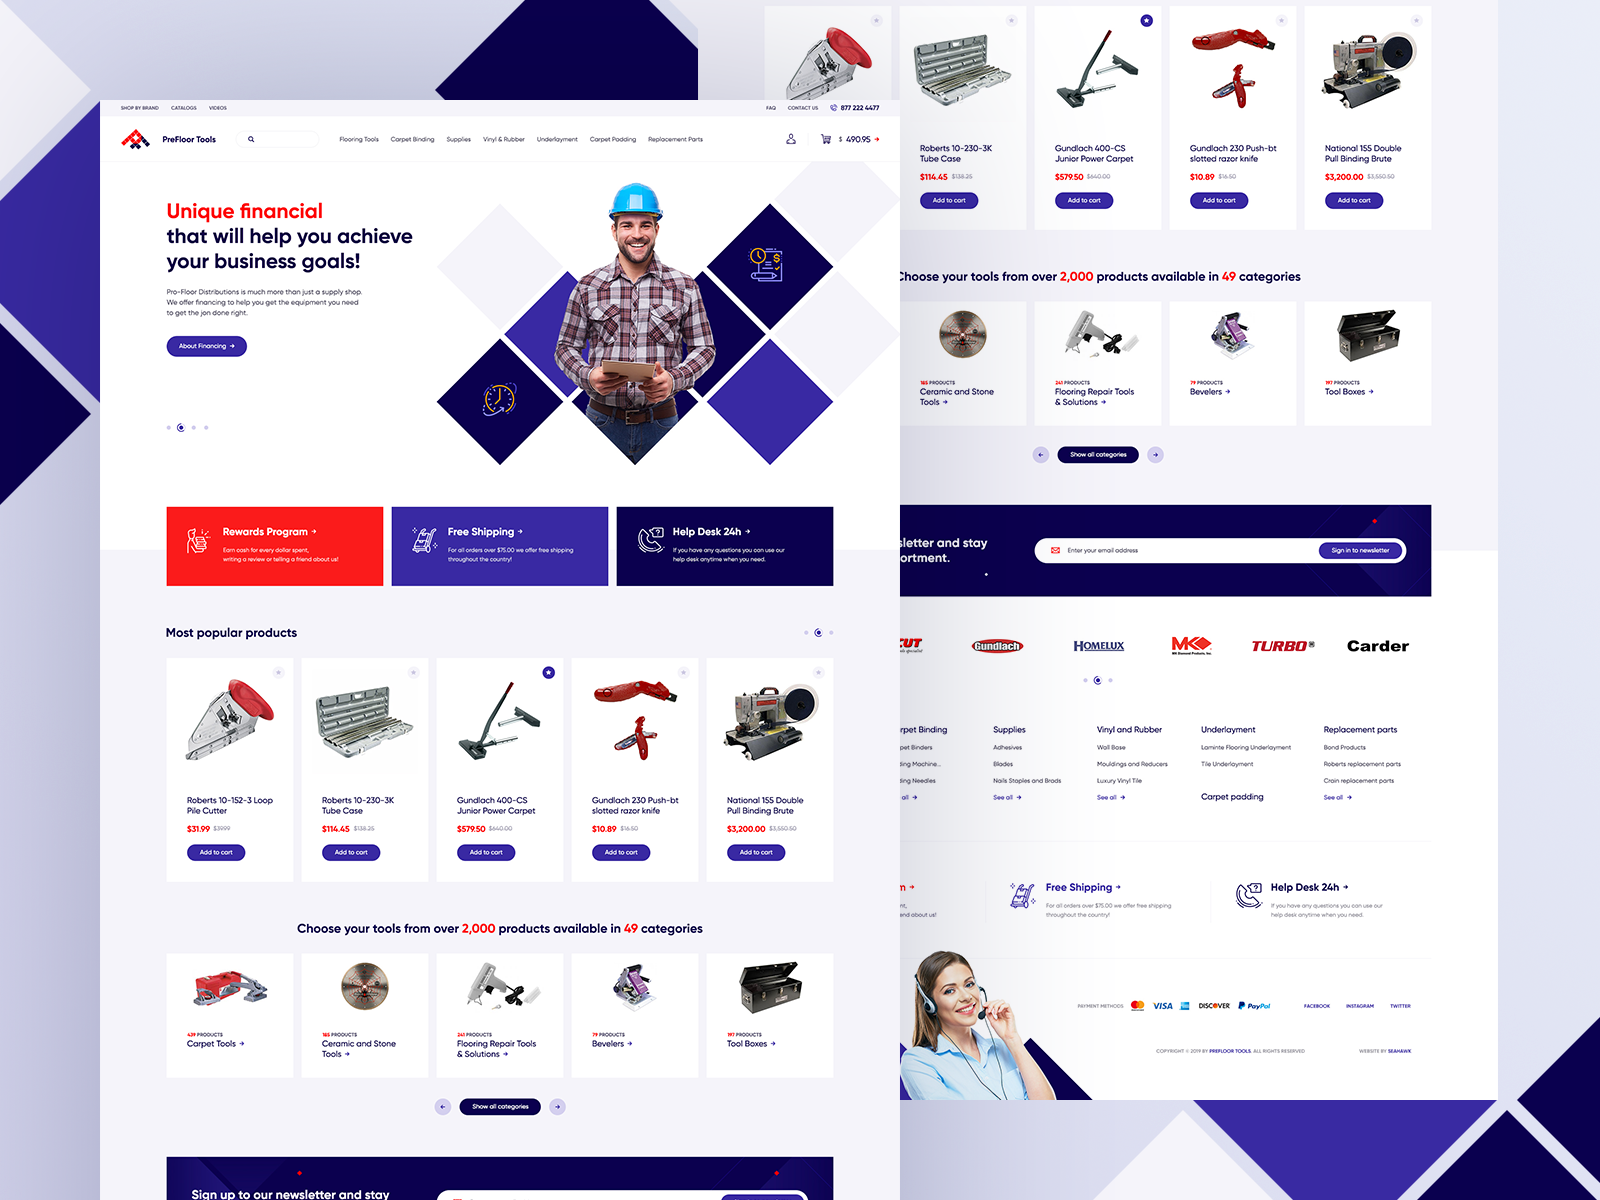 best web design tools for ecommerce